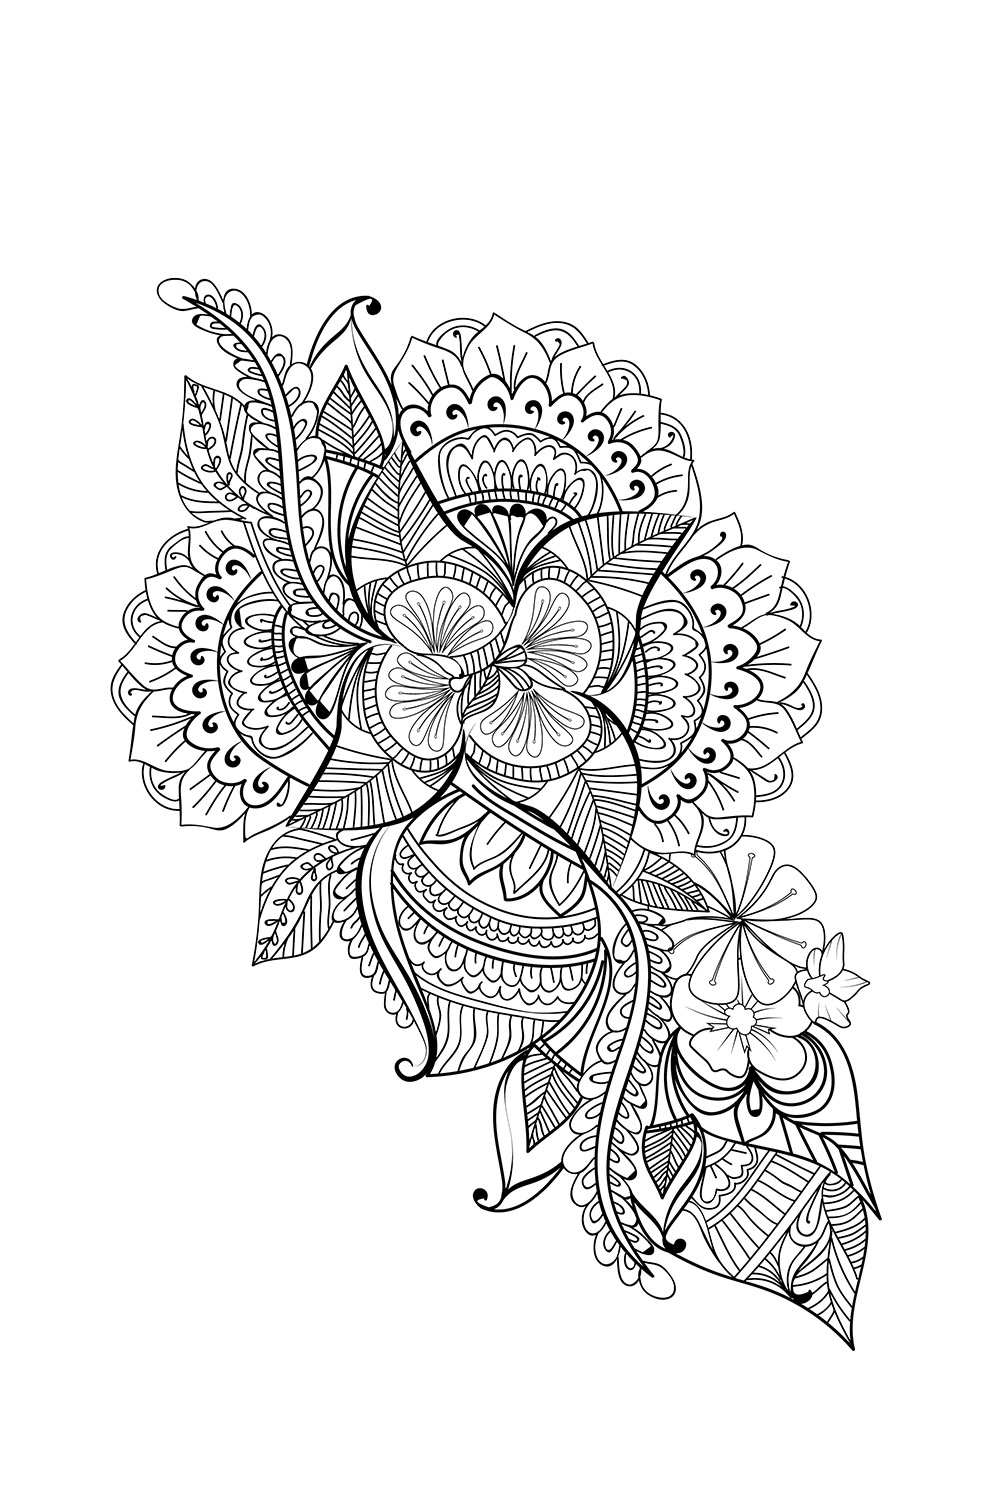 Aesthetic flower doodles, aesthetic flower doodles transparent background, aesthetic flower doodle simple, flower doodle art, flower doodle zentangle art pinterest preview image.